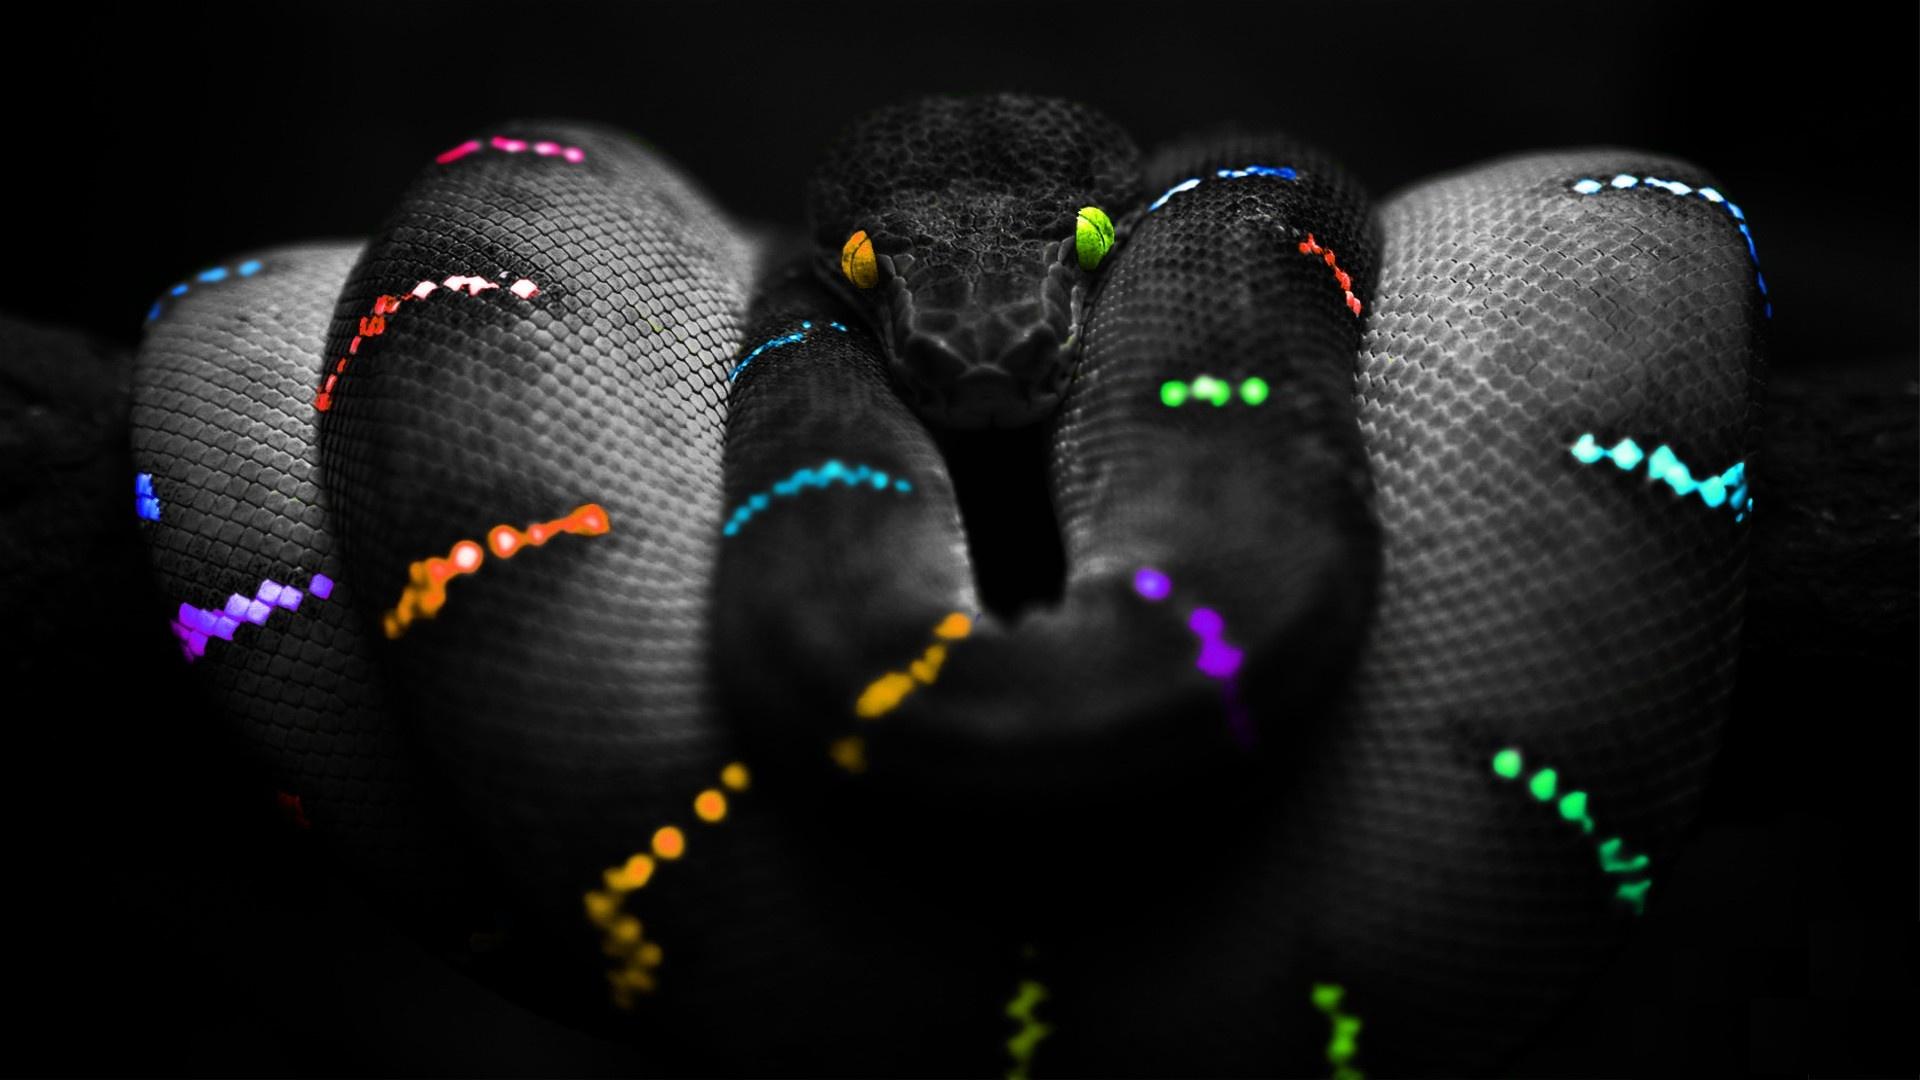 Rainbow snake HD Wallpaper Background Image 1920x1080 1920x1080